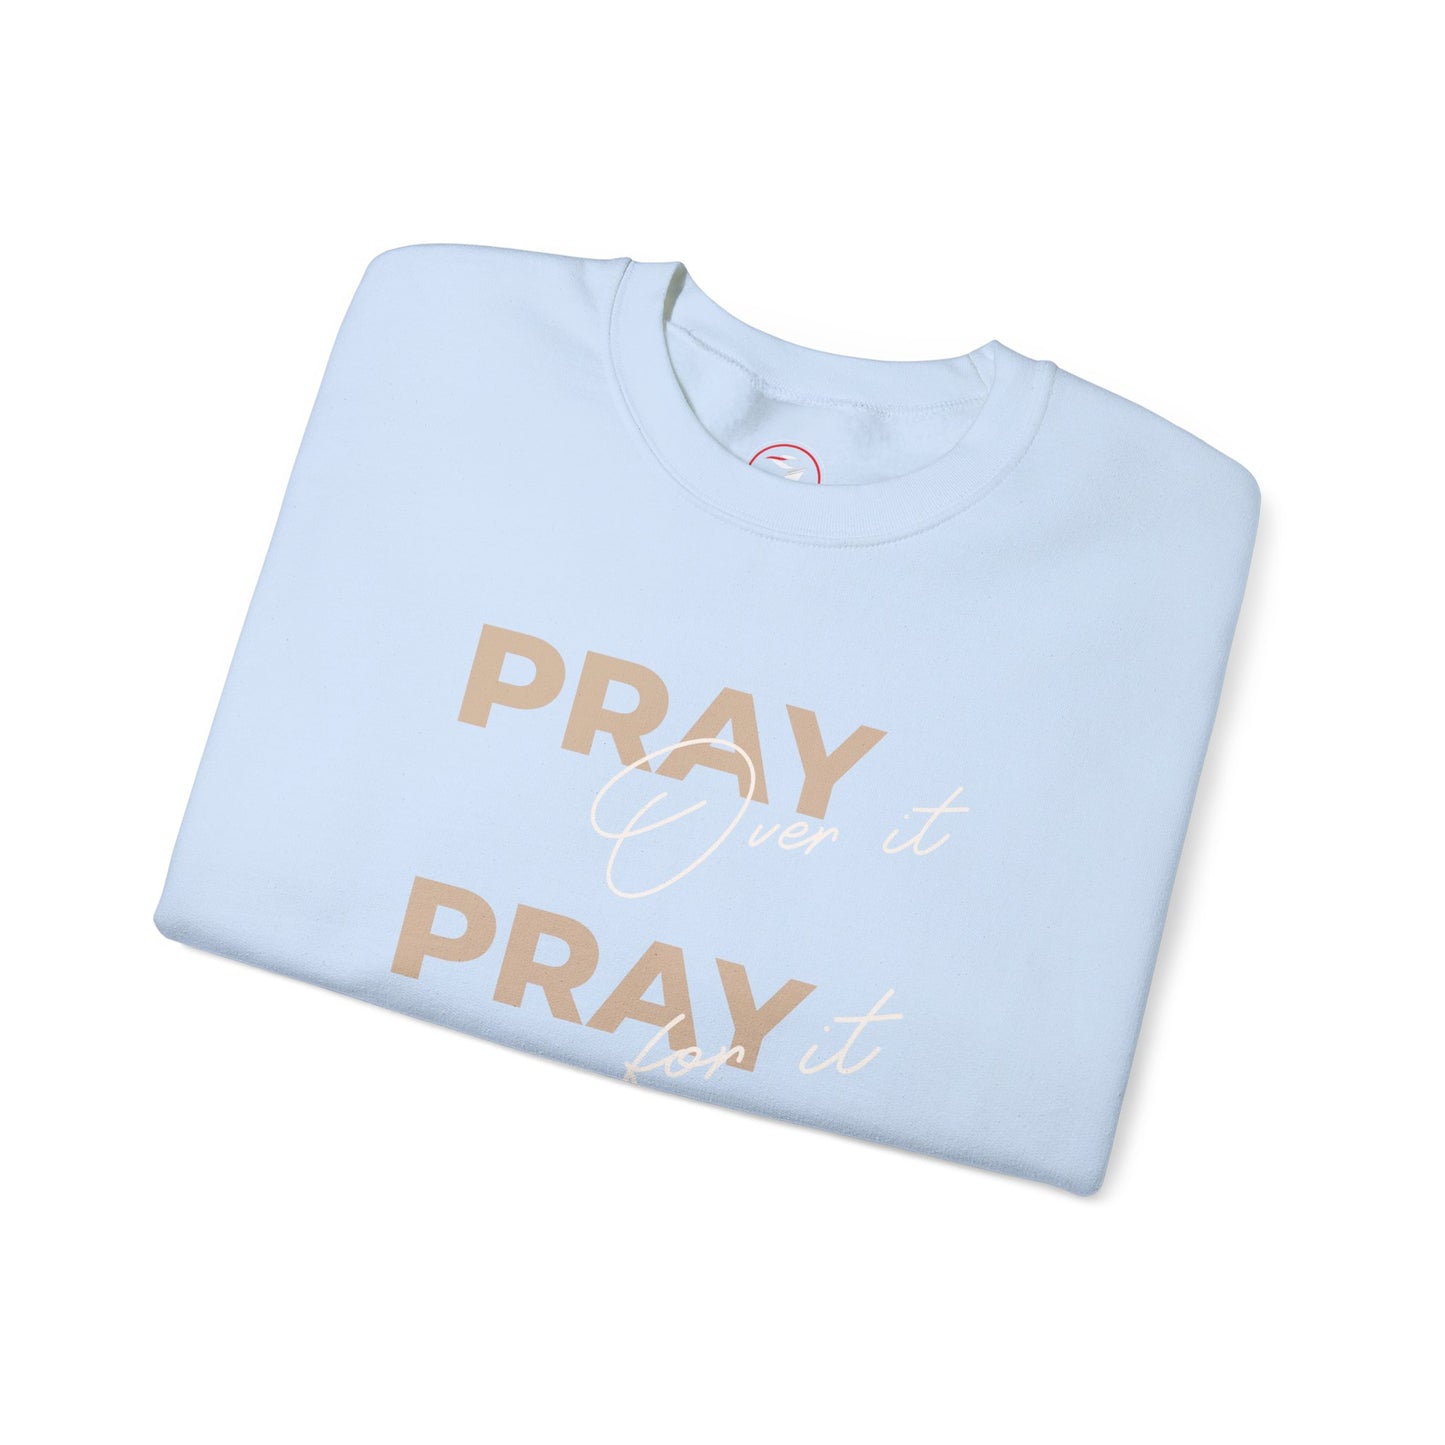 Pray Pray Pray Unisex Heavy Blend™ Crewneck Sweatshirt